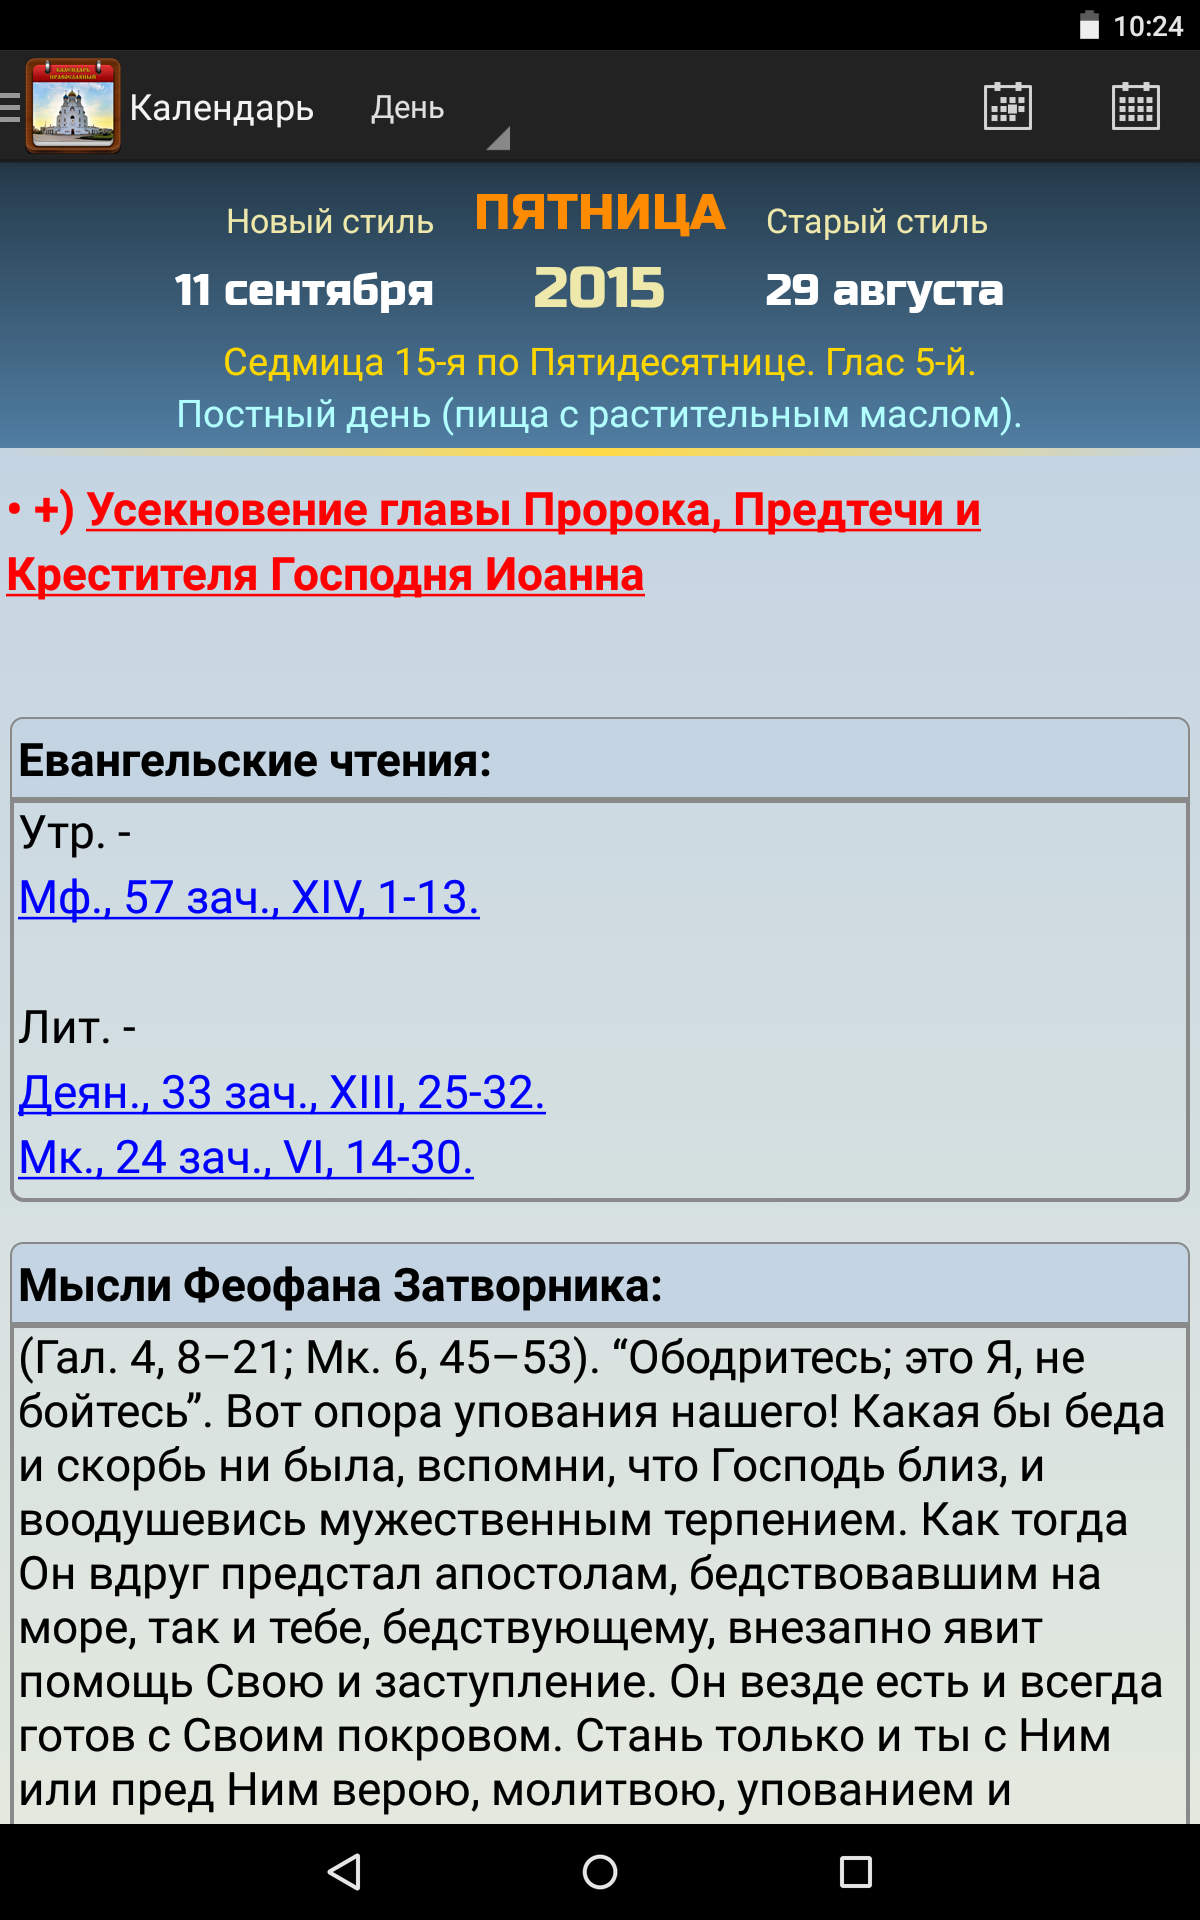 Android application Календарь Православный screenshort